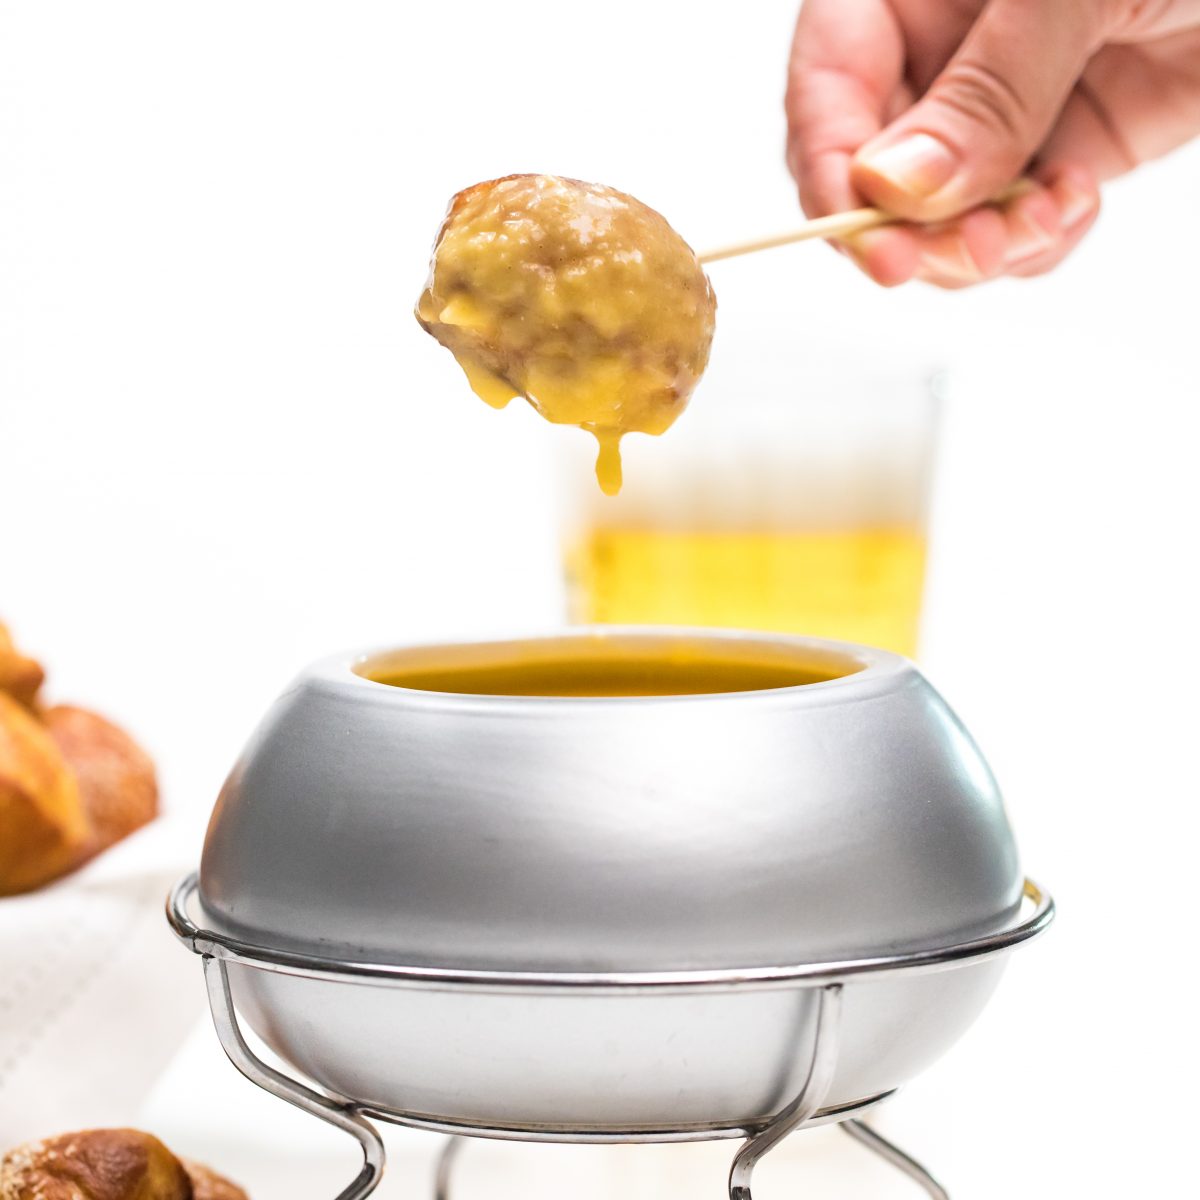 Cheesy-beer fondue